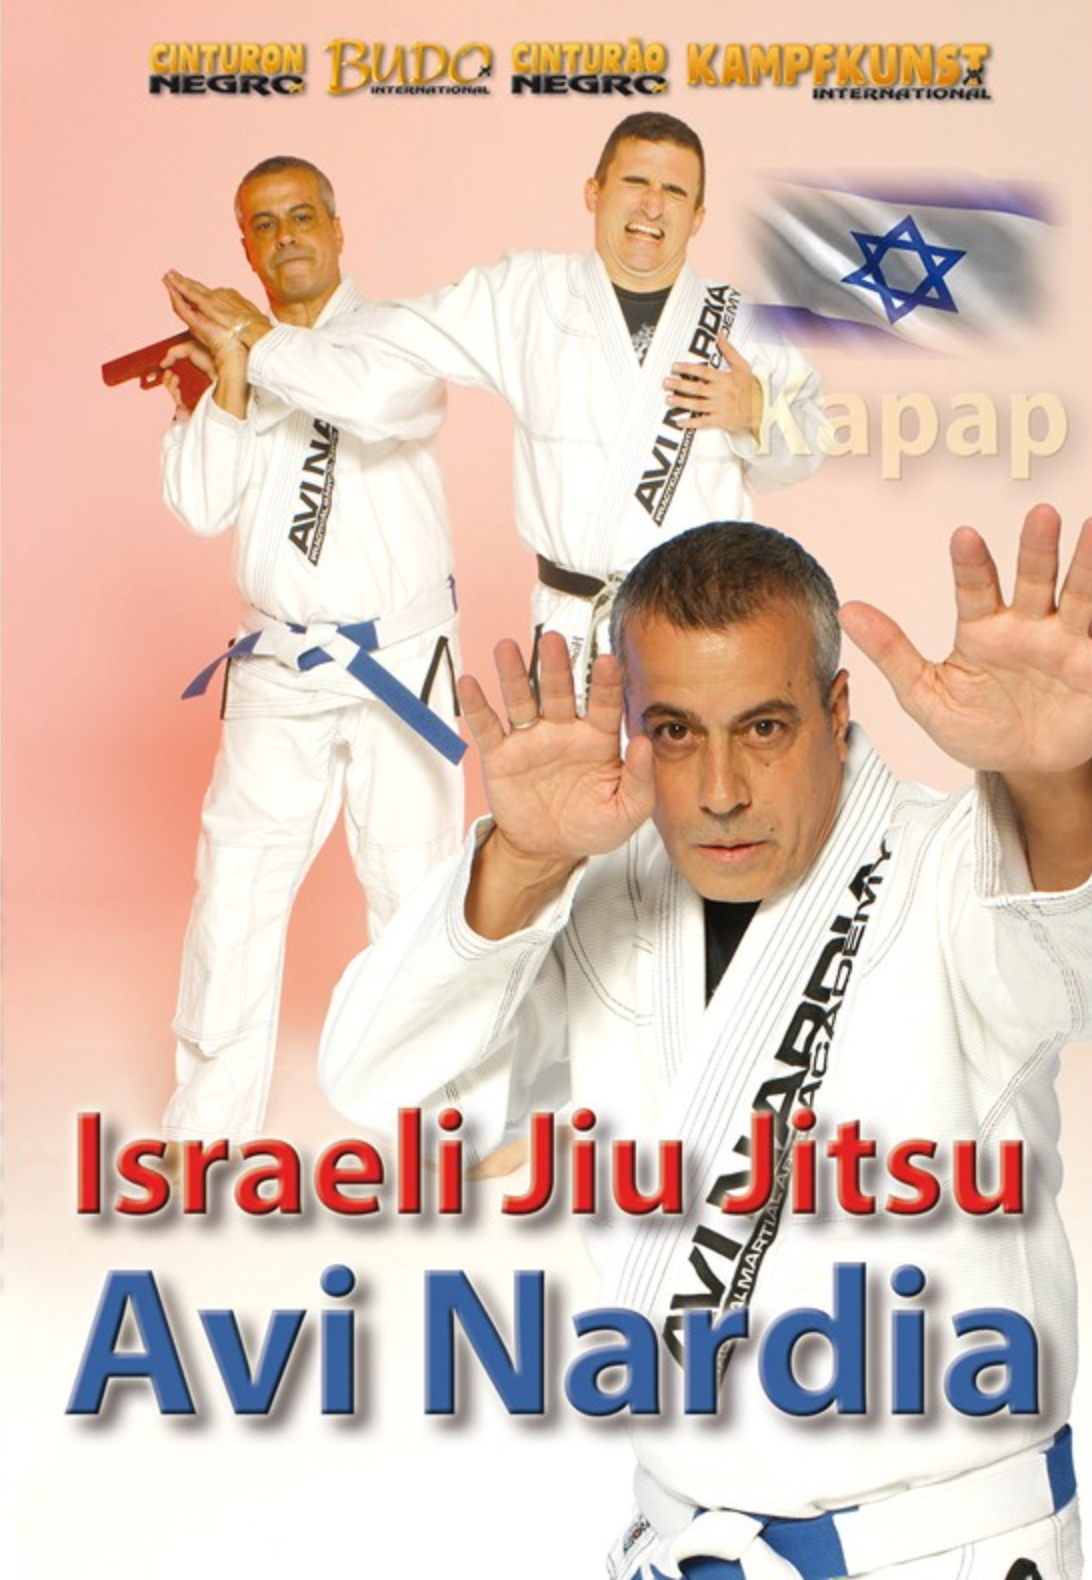 Kapap Israeli Jiu Jitsu Vol 1 DVD with Avi Nardia - Budovideos Inc